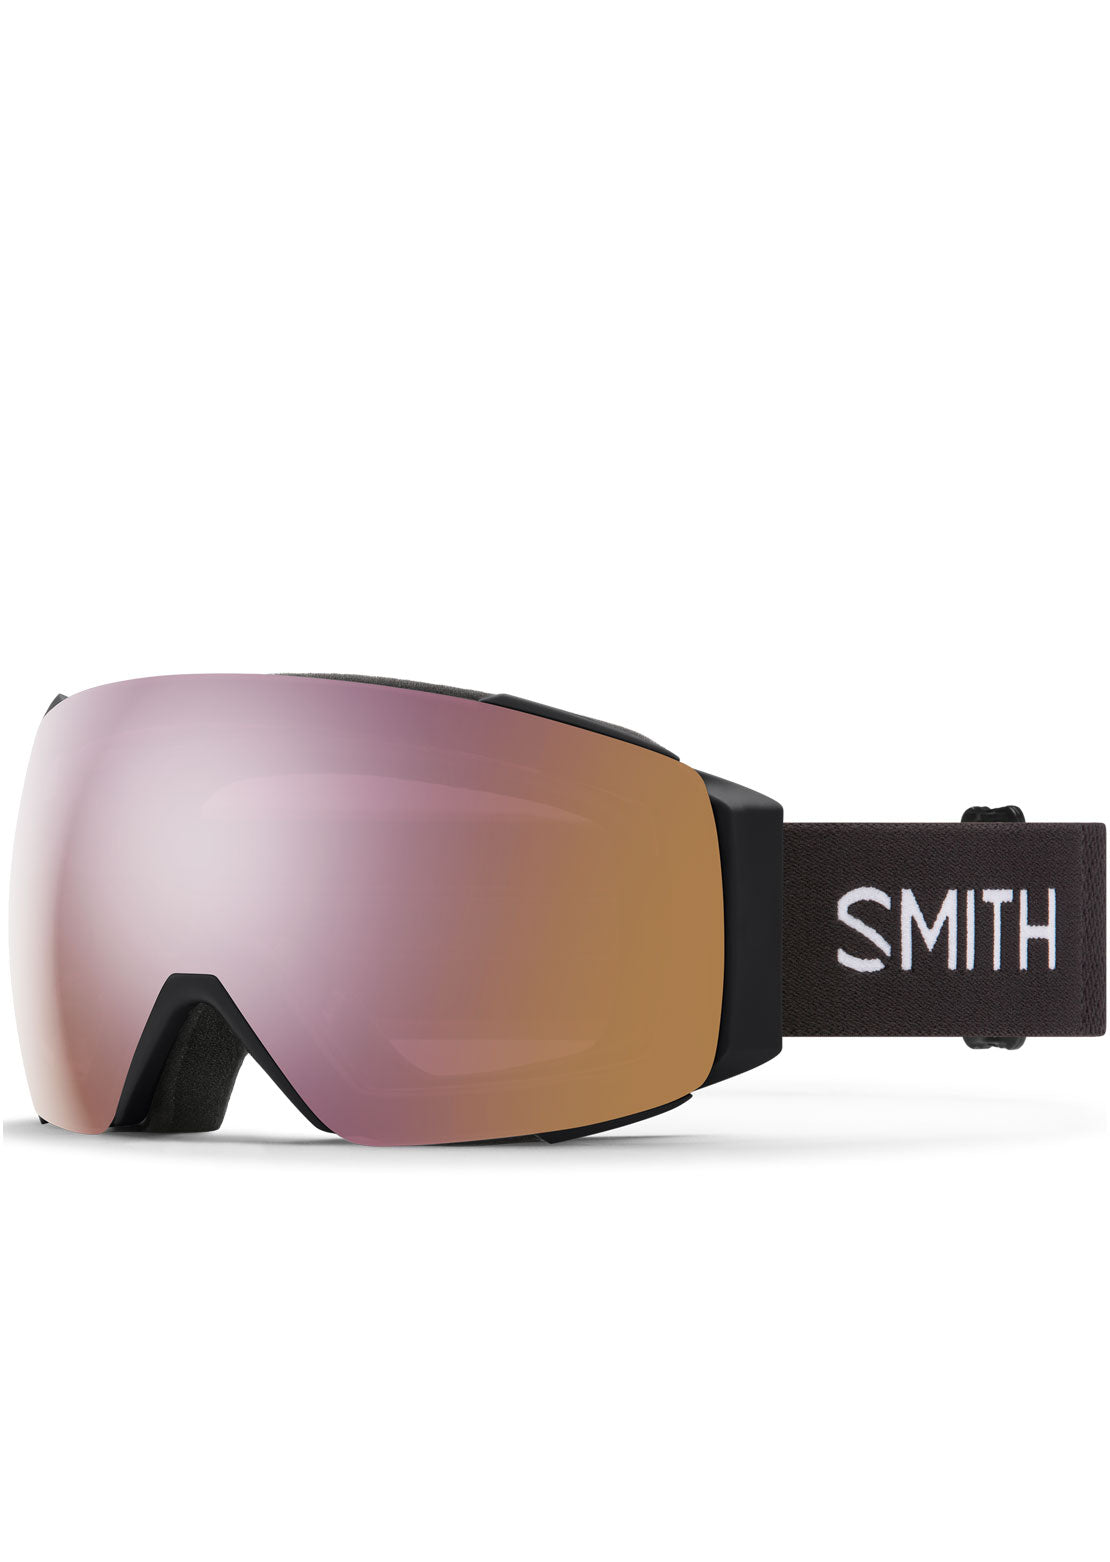 Smith I/O Mag Goggles Black/ChromaPop Everyday Rose Gold Mirror